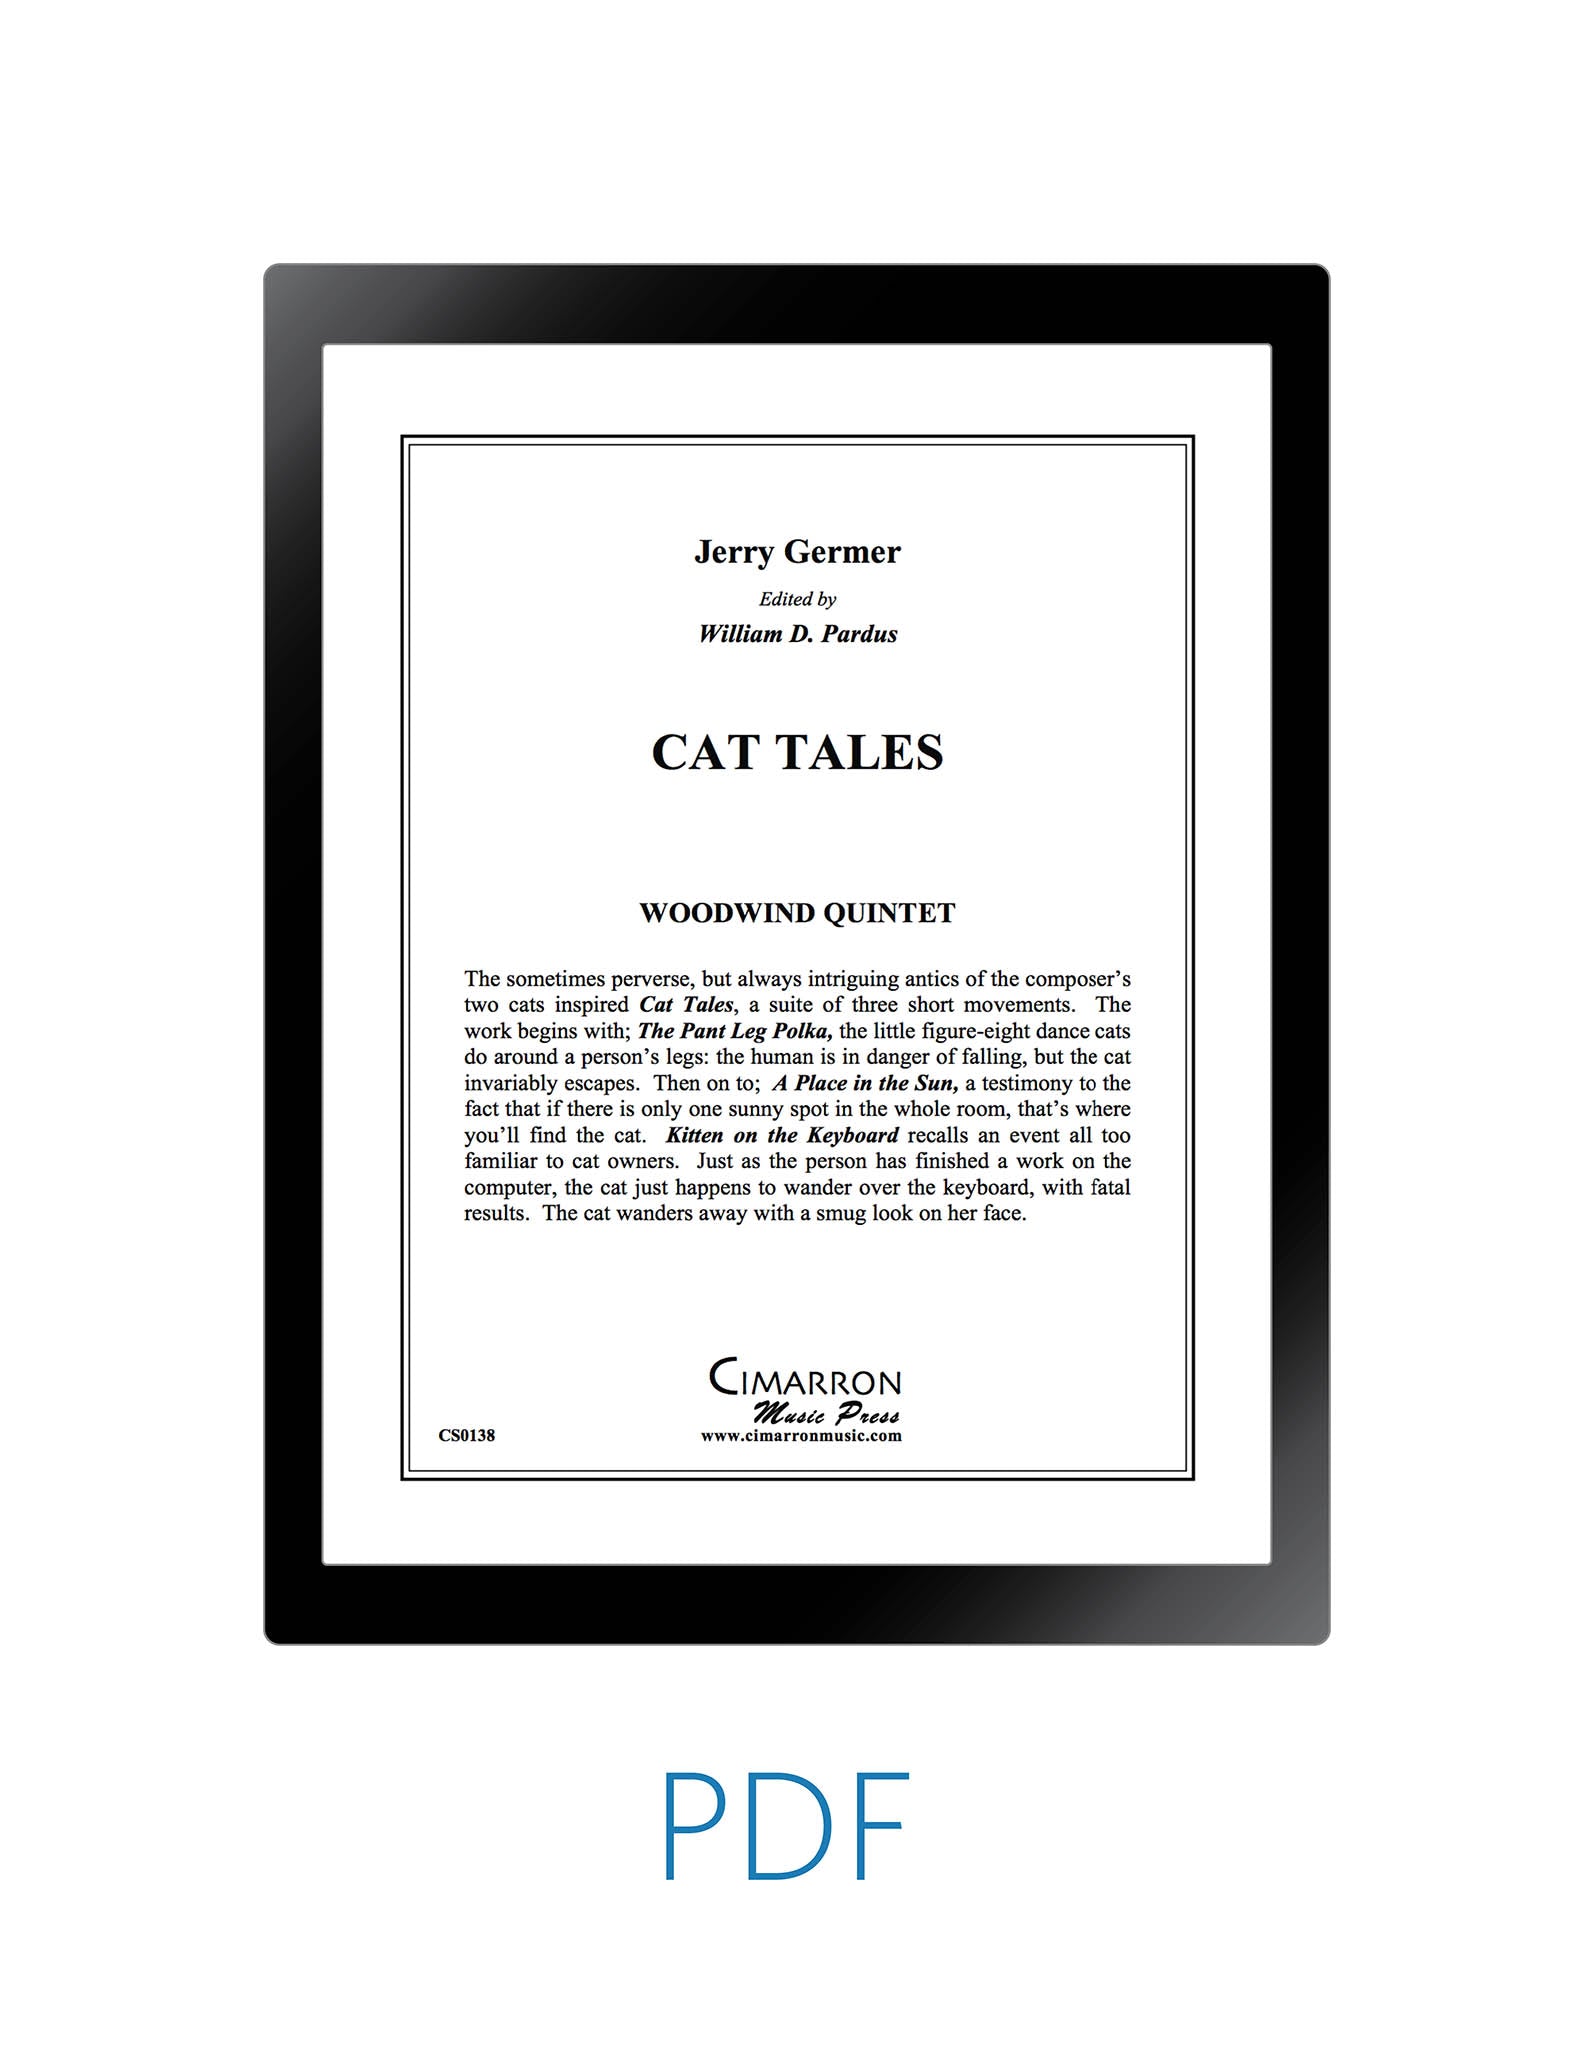 Germer Cat Tales woodwind quintet PDF